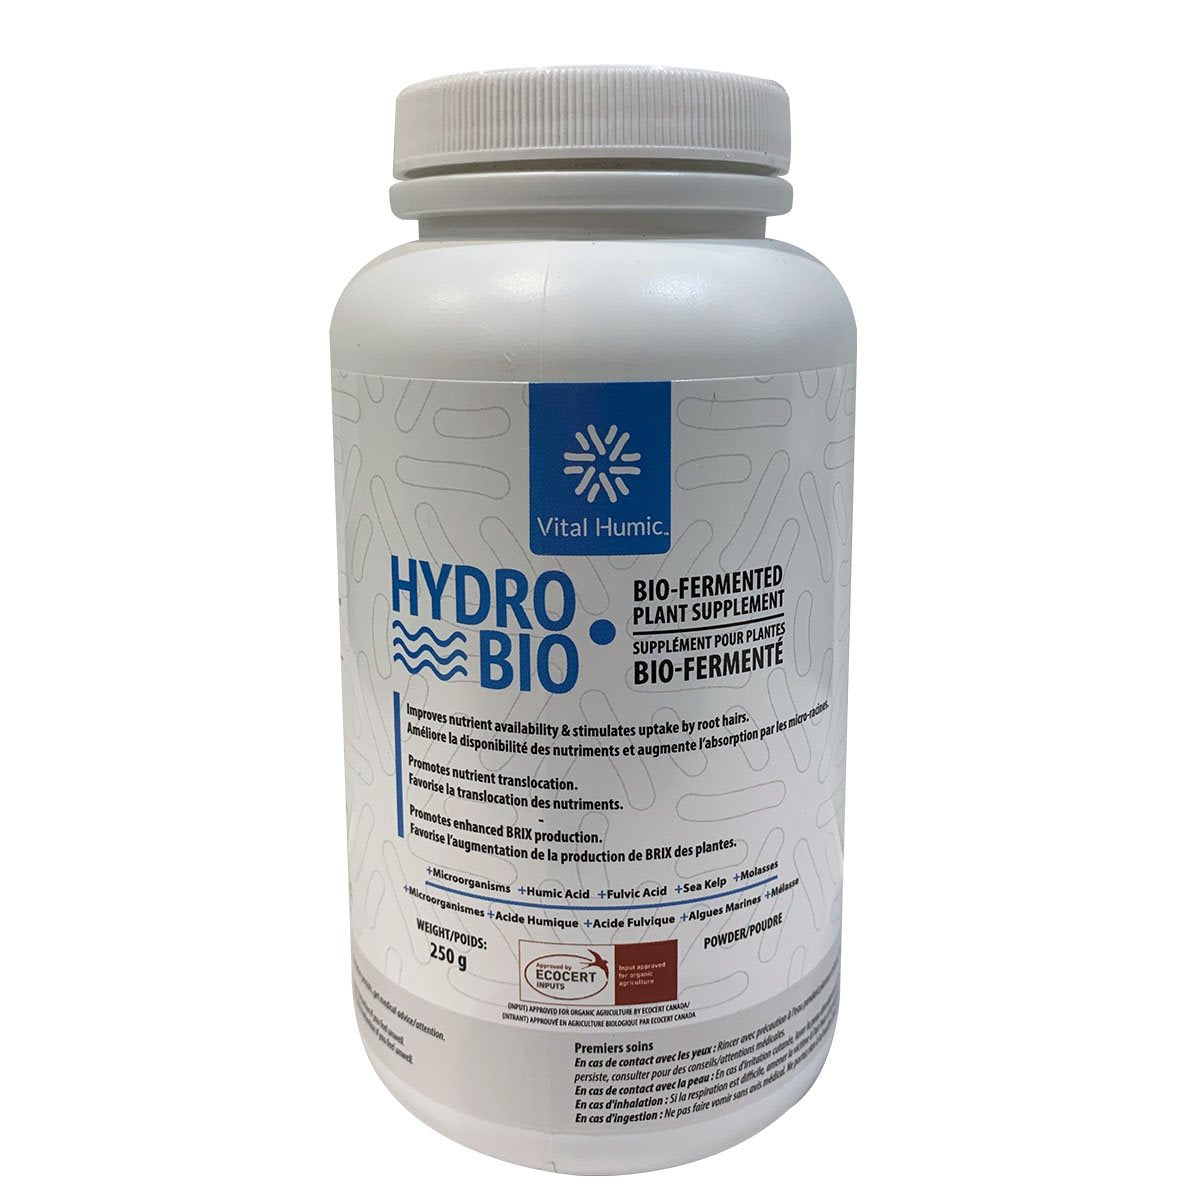 Product Secondary Image:Vital Humic Hydro Bio